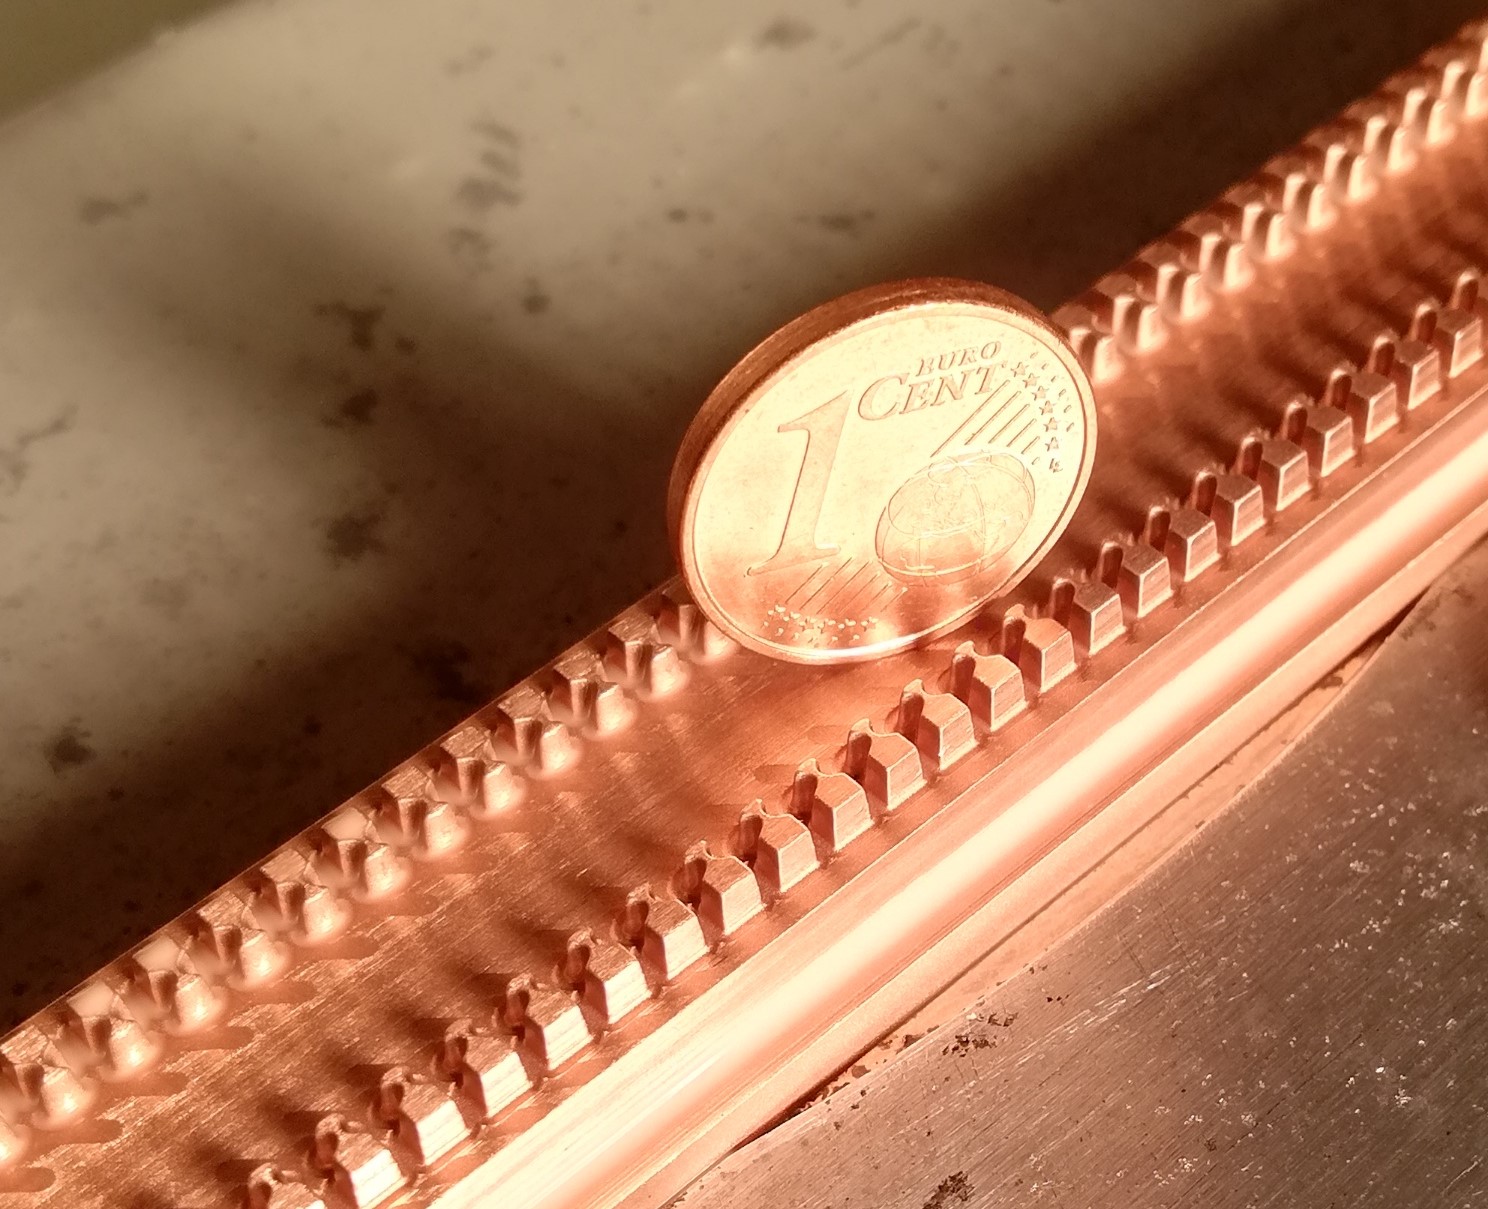 PK0 Electrode Comparison to a 1 Cent Coin